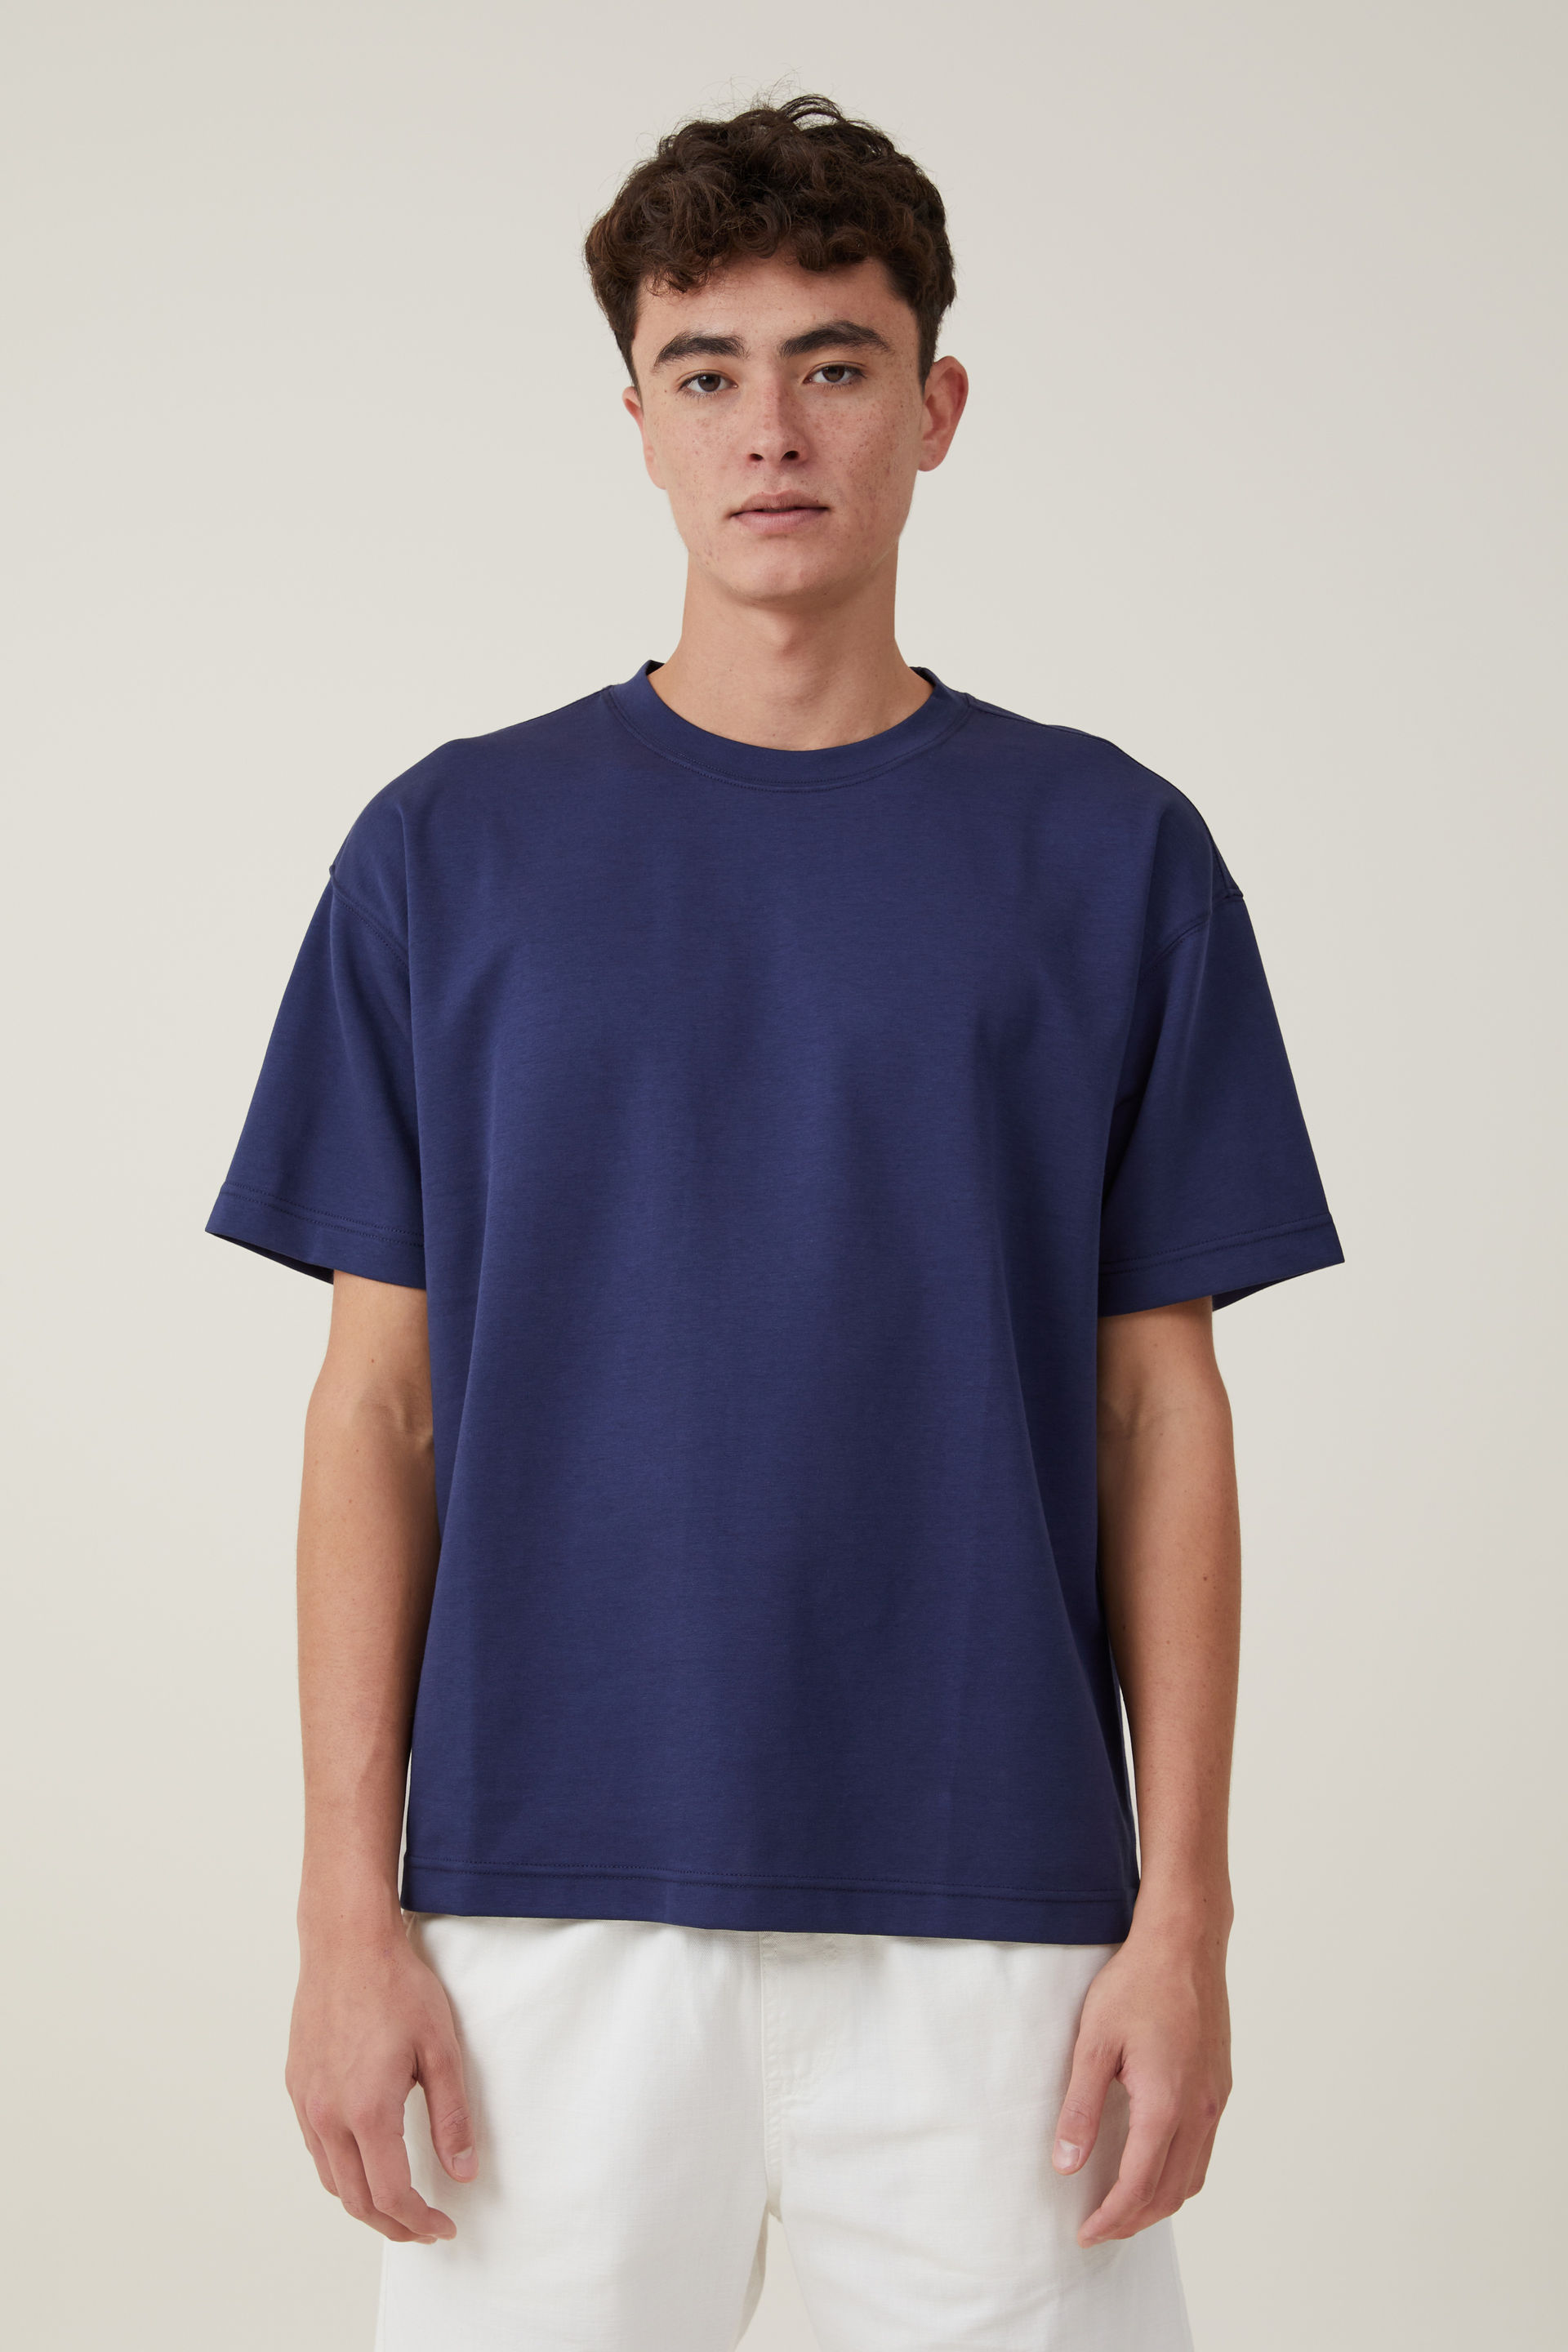 Cotton On Men - Hyperweave T-Shirt - Indigo